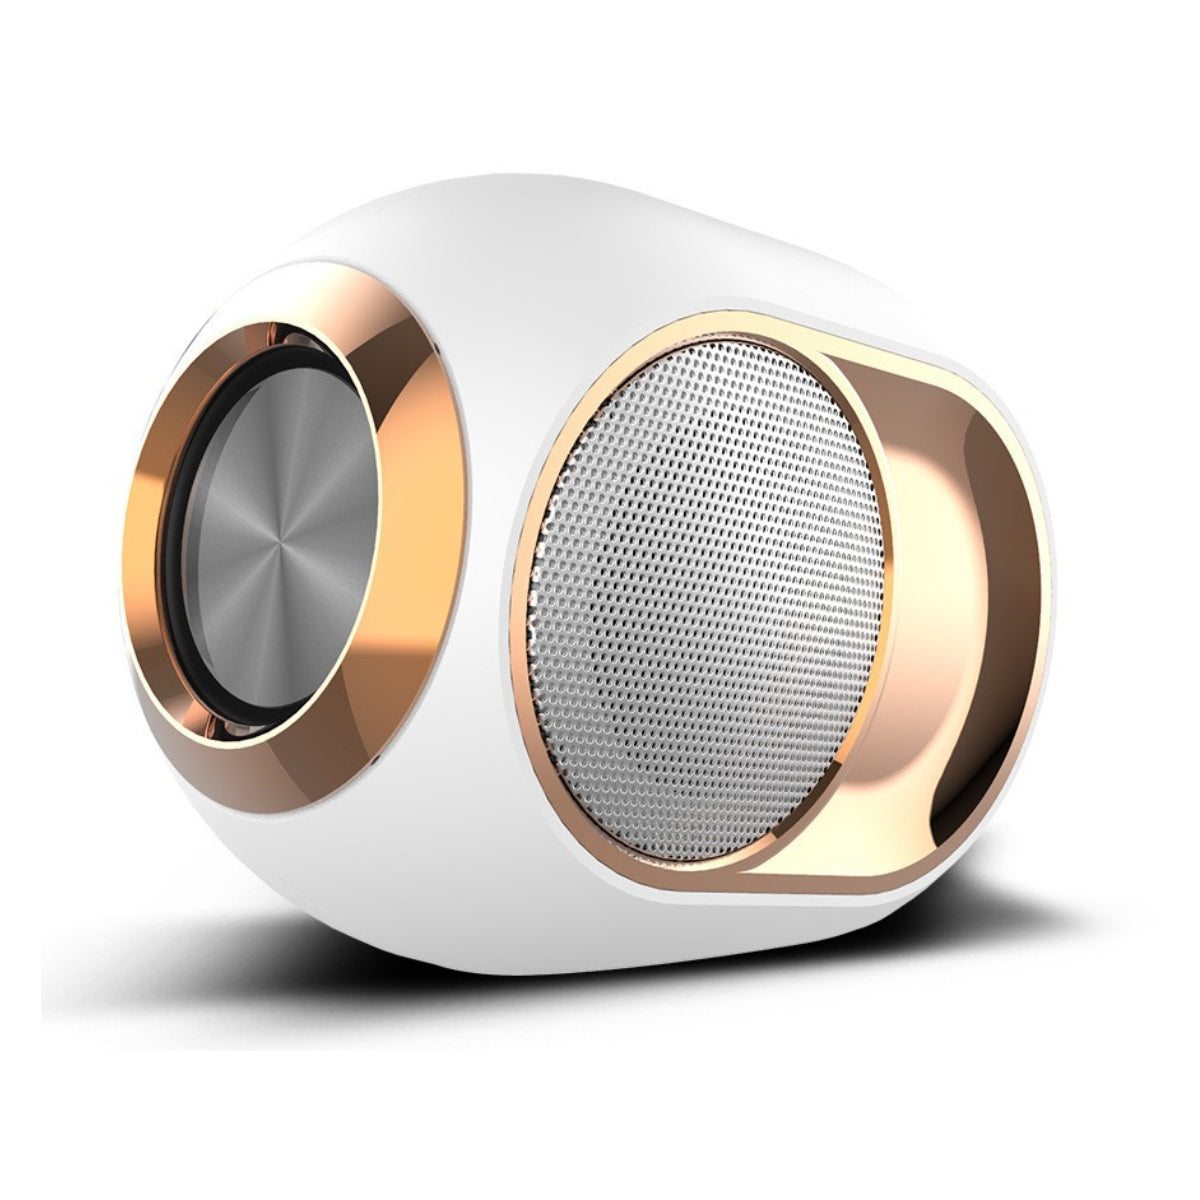 Olden Golden Bluetooth Speaker - 13208670_large_0e5c754f-dba1-4330-b5ec-706839241d11